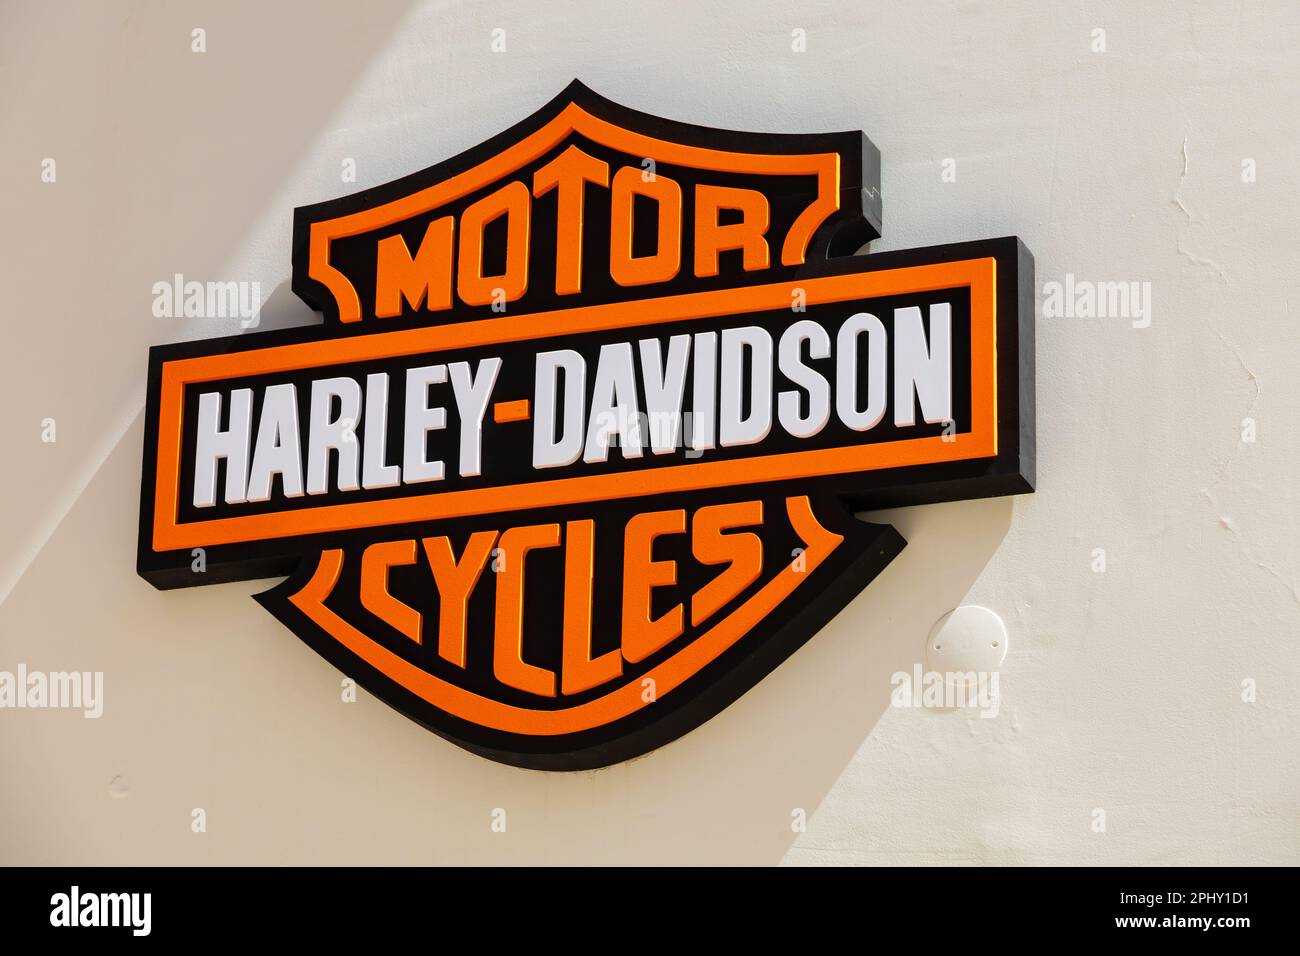 Harley Davidson Cycles sign on dealership wall. Funchal, Madeira, Portugal Stock Photo